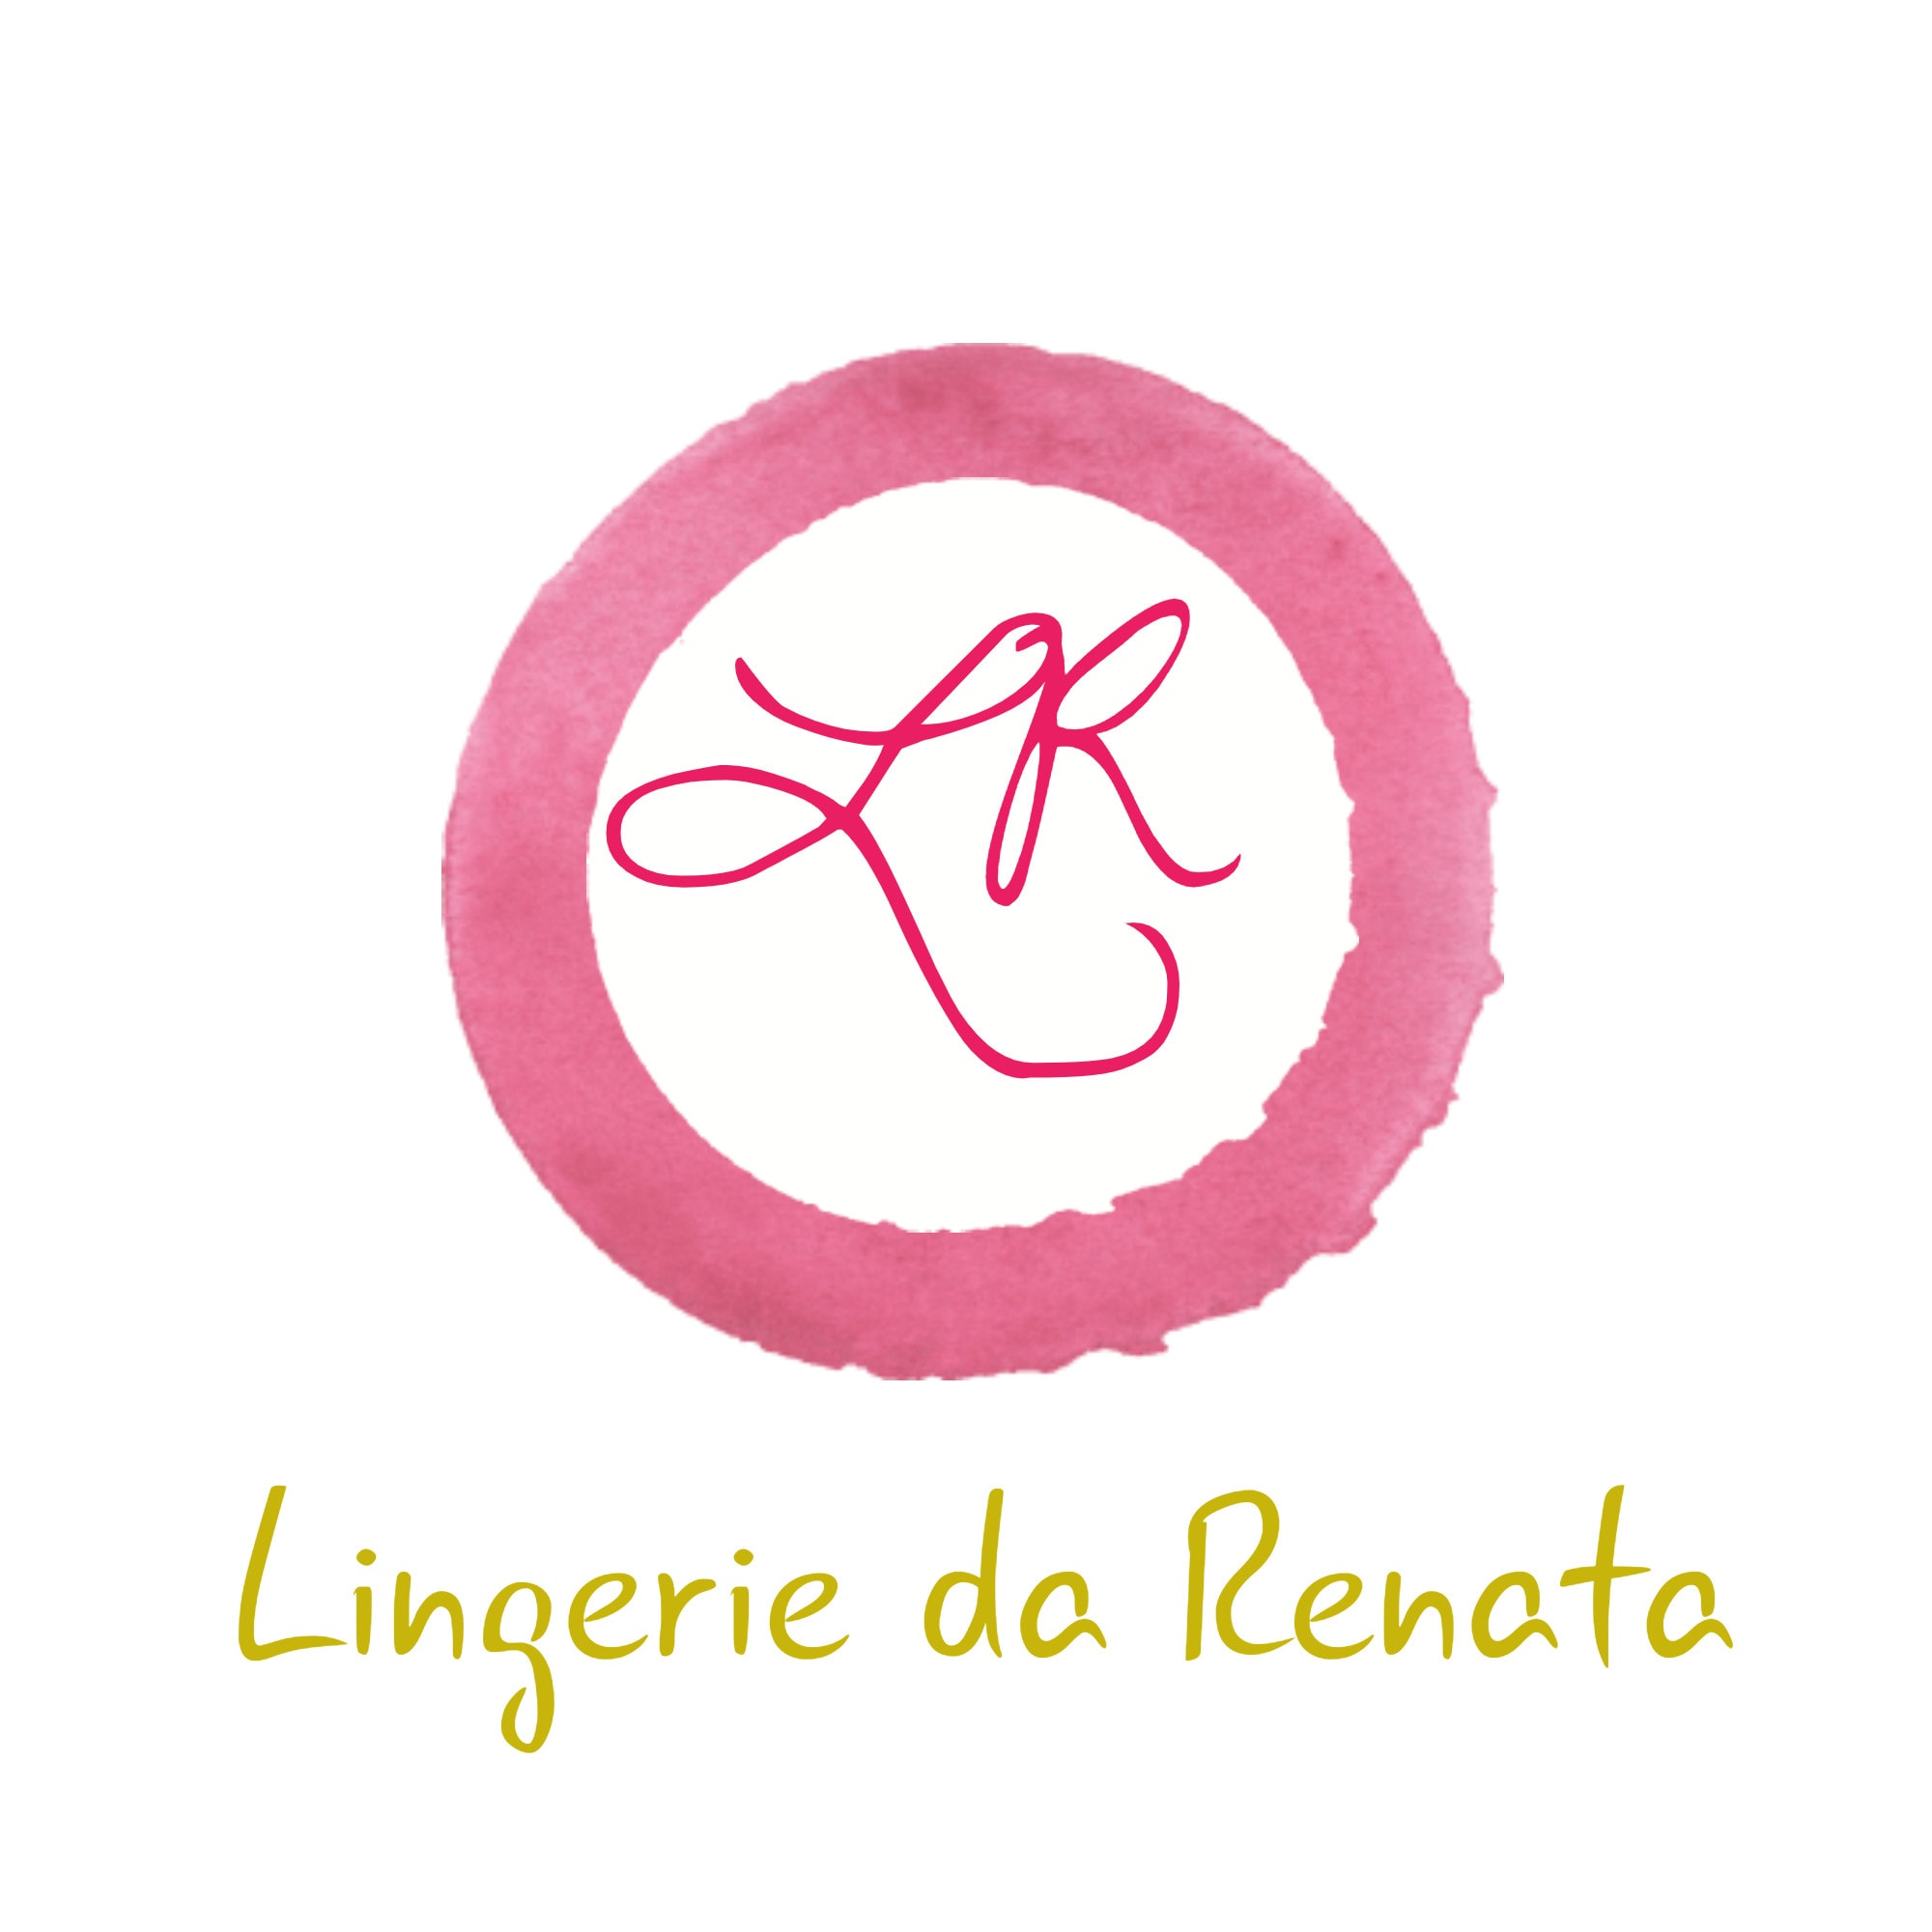 Lingerie da Renata